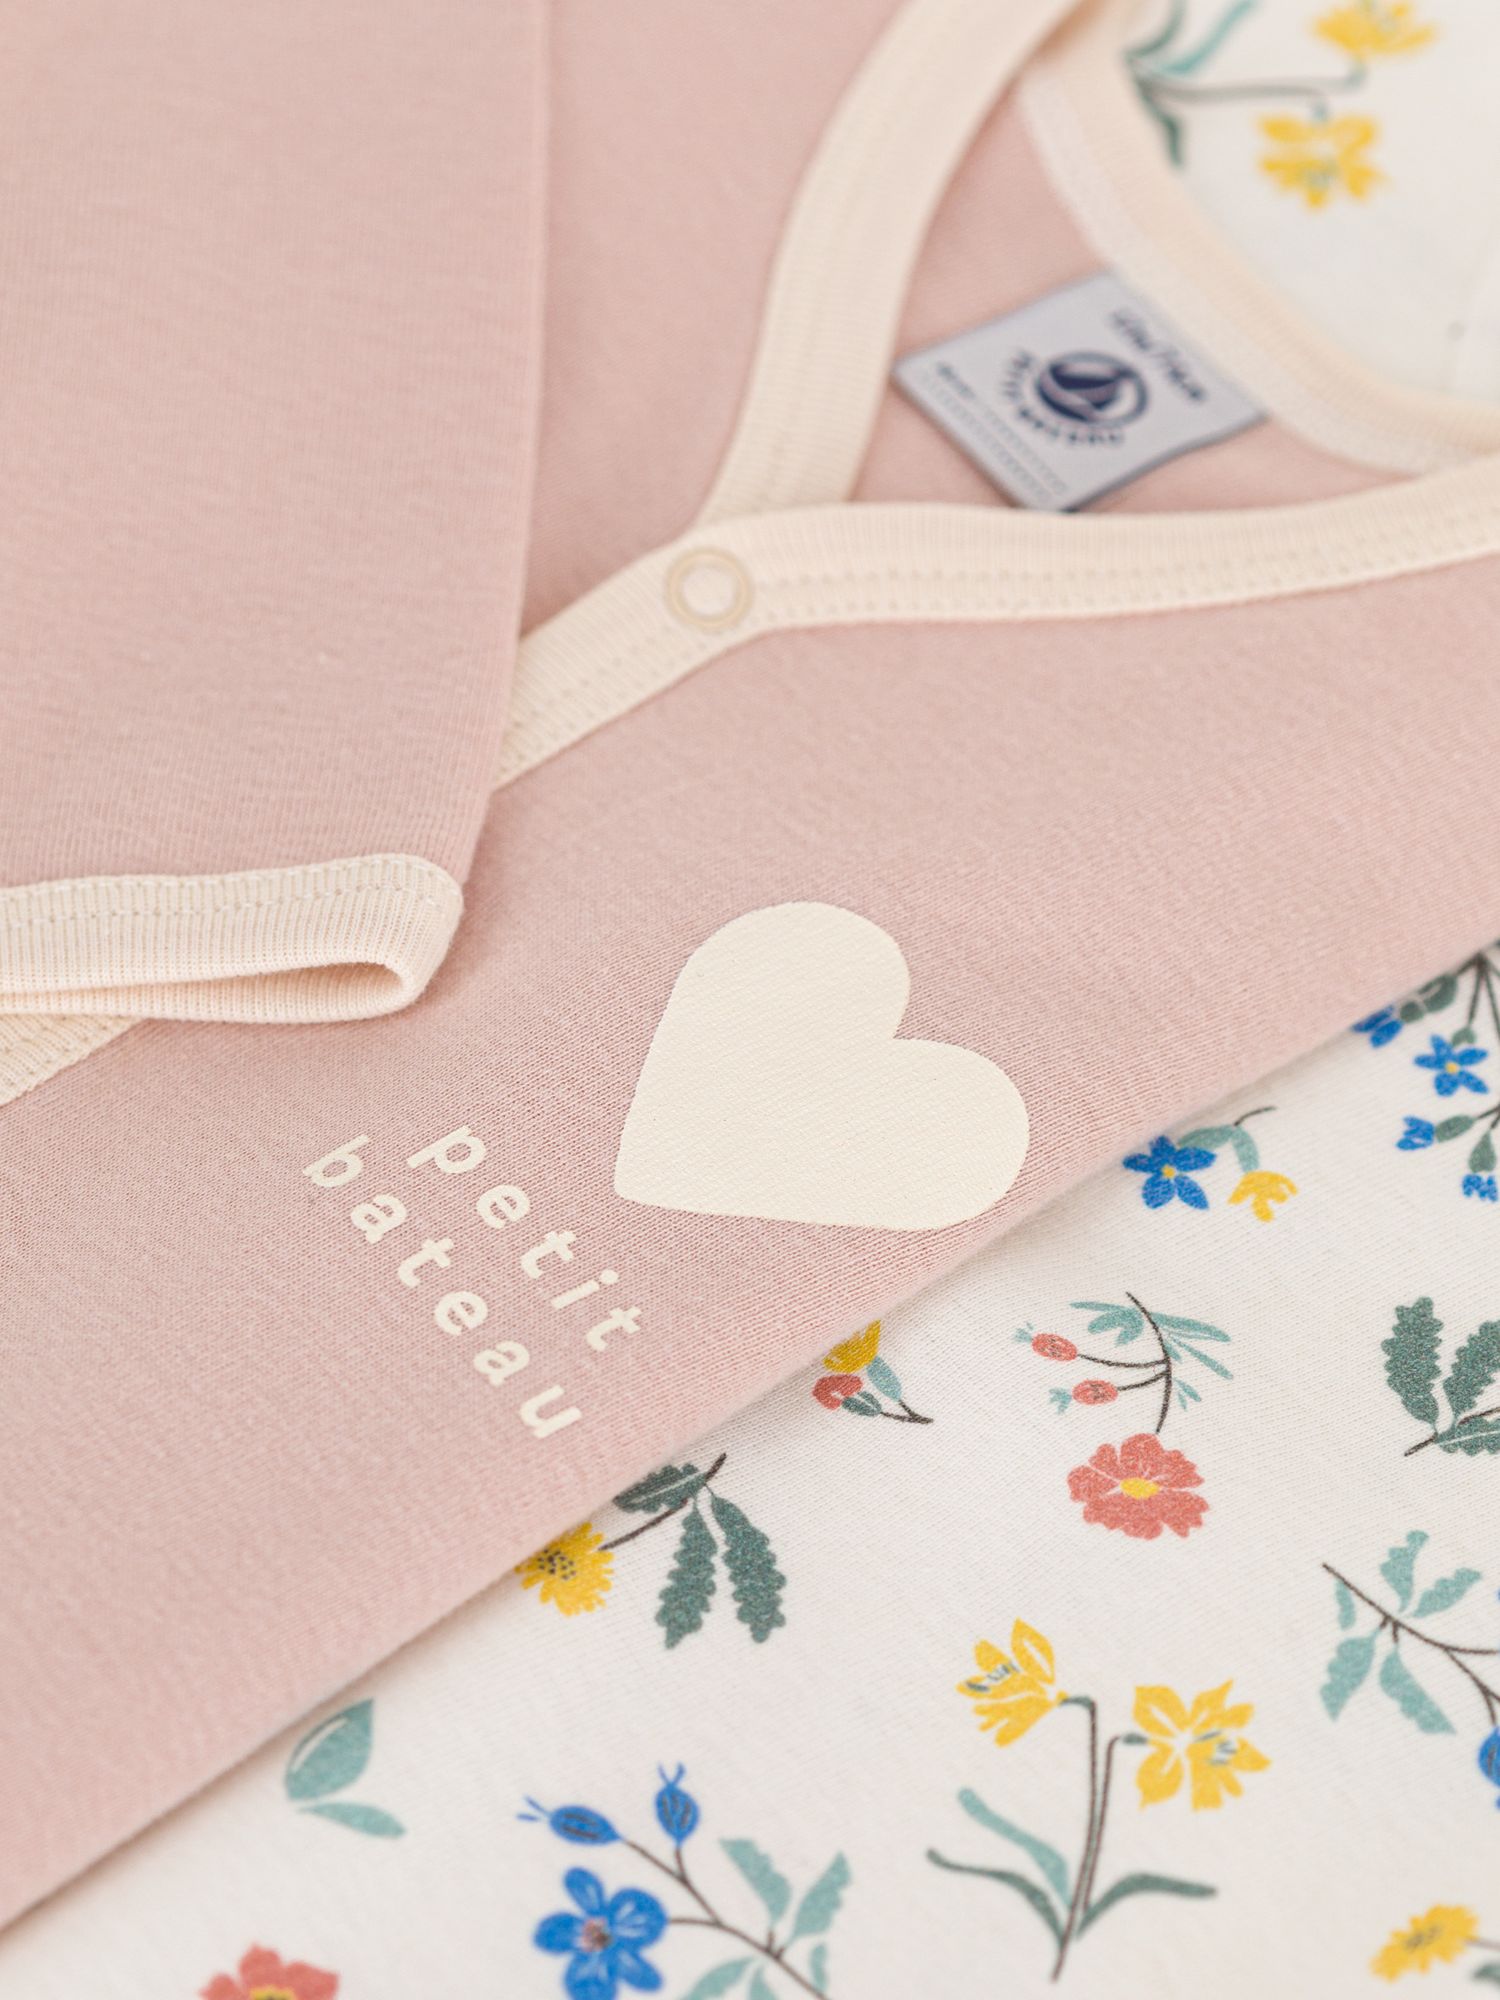 Petit Bateau Baby Floral Print/Plain Sleepsuits, Pack Of 2, Multi, 3 months